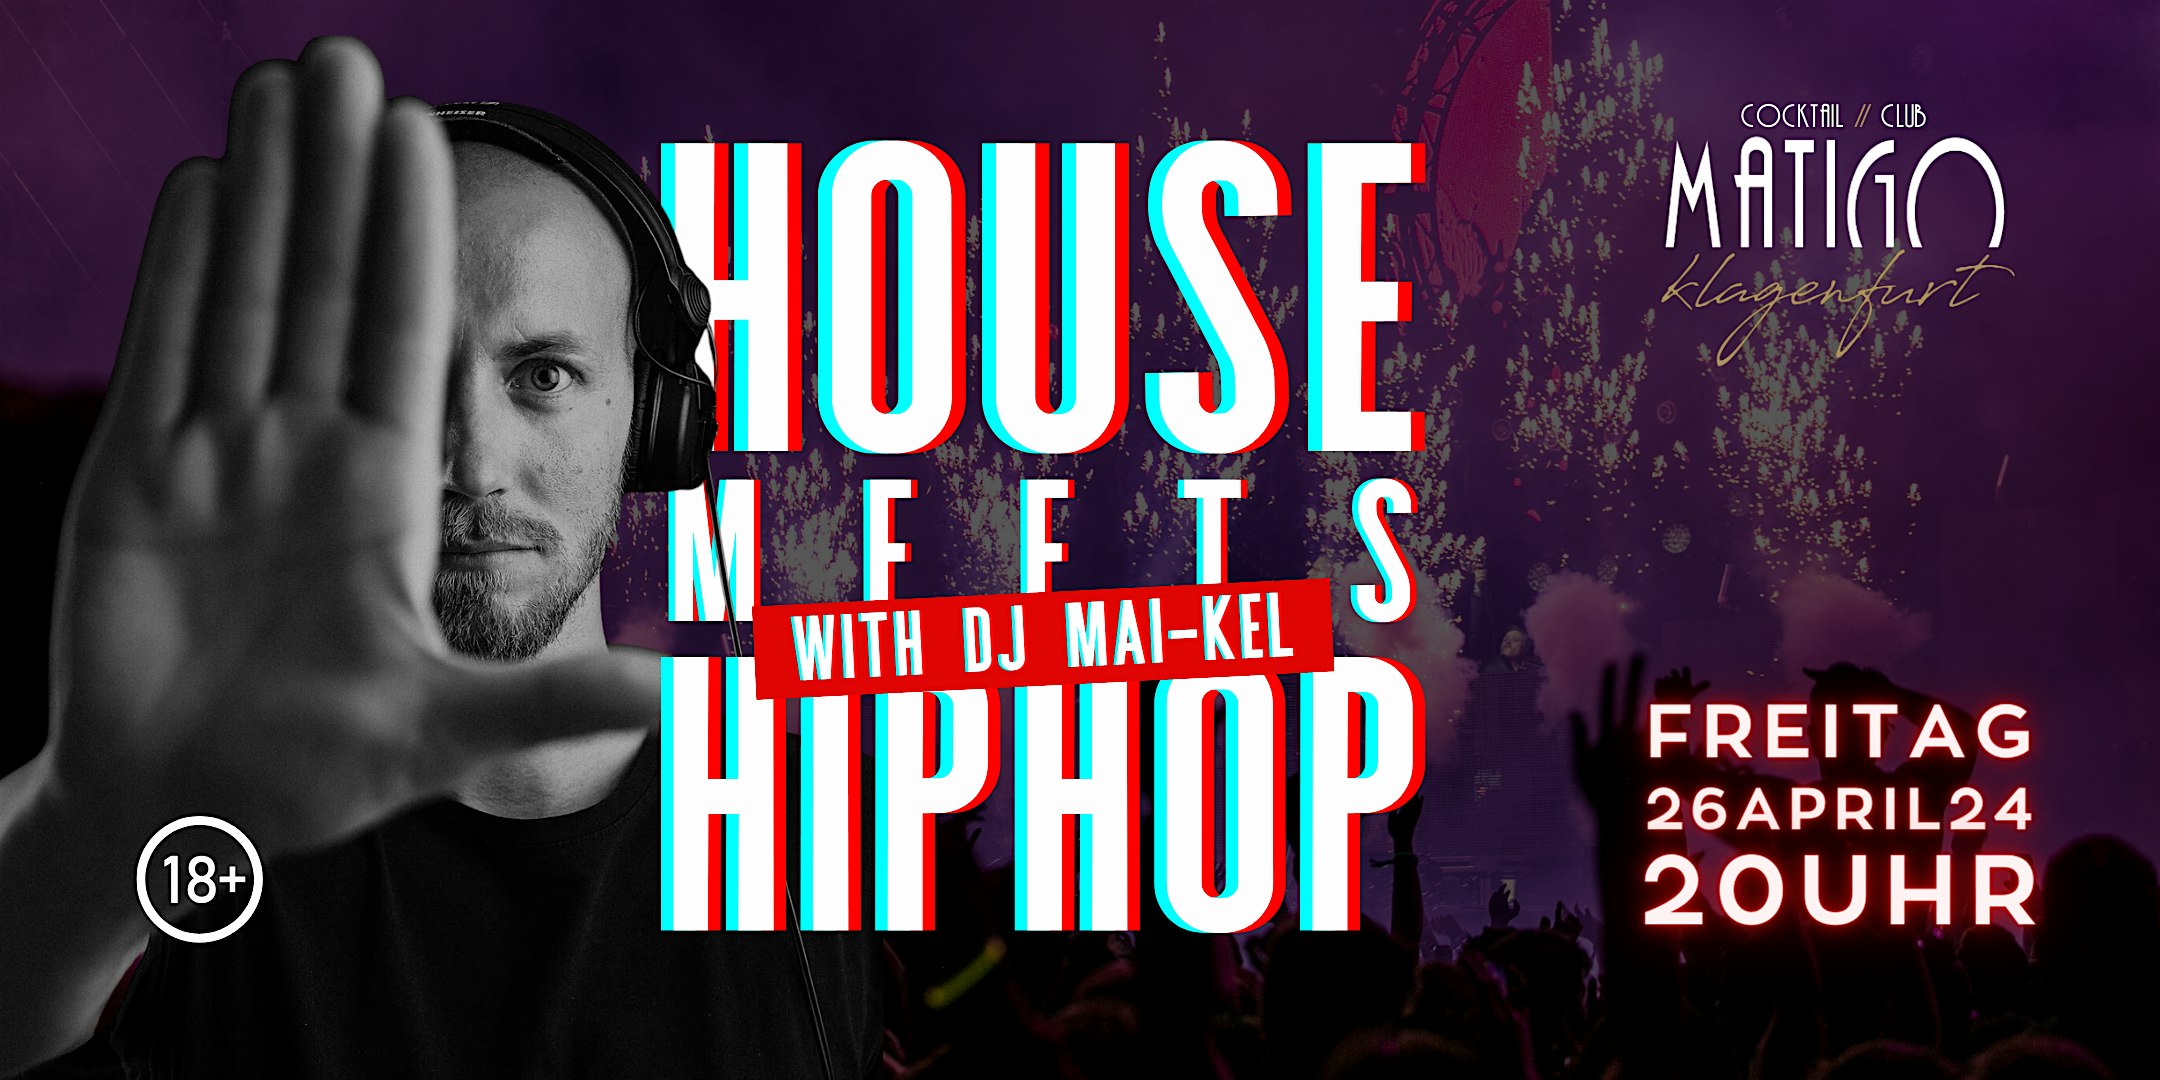 HOUSE meets HIPHOP with DJ MAI-KEL